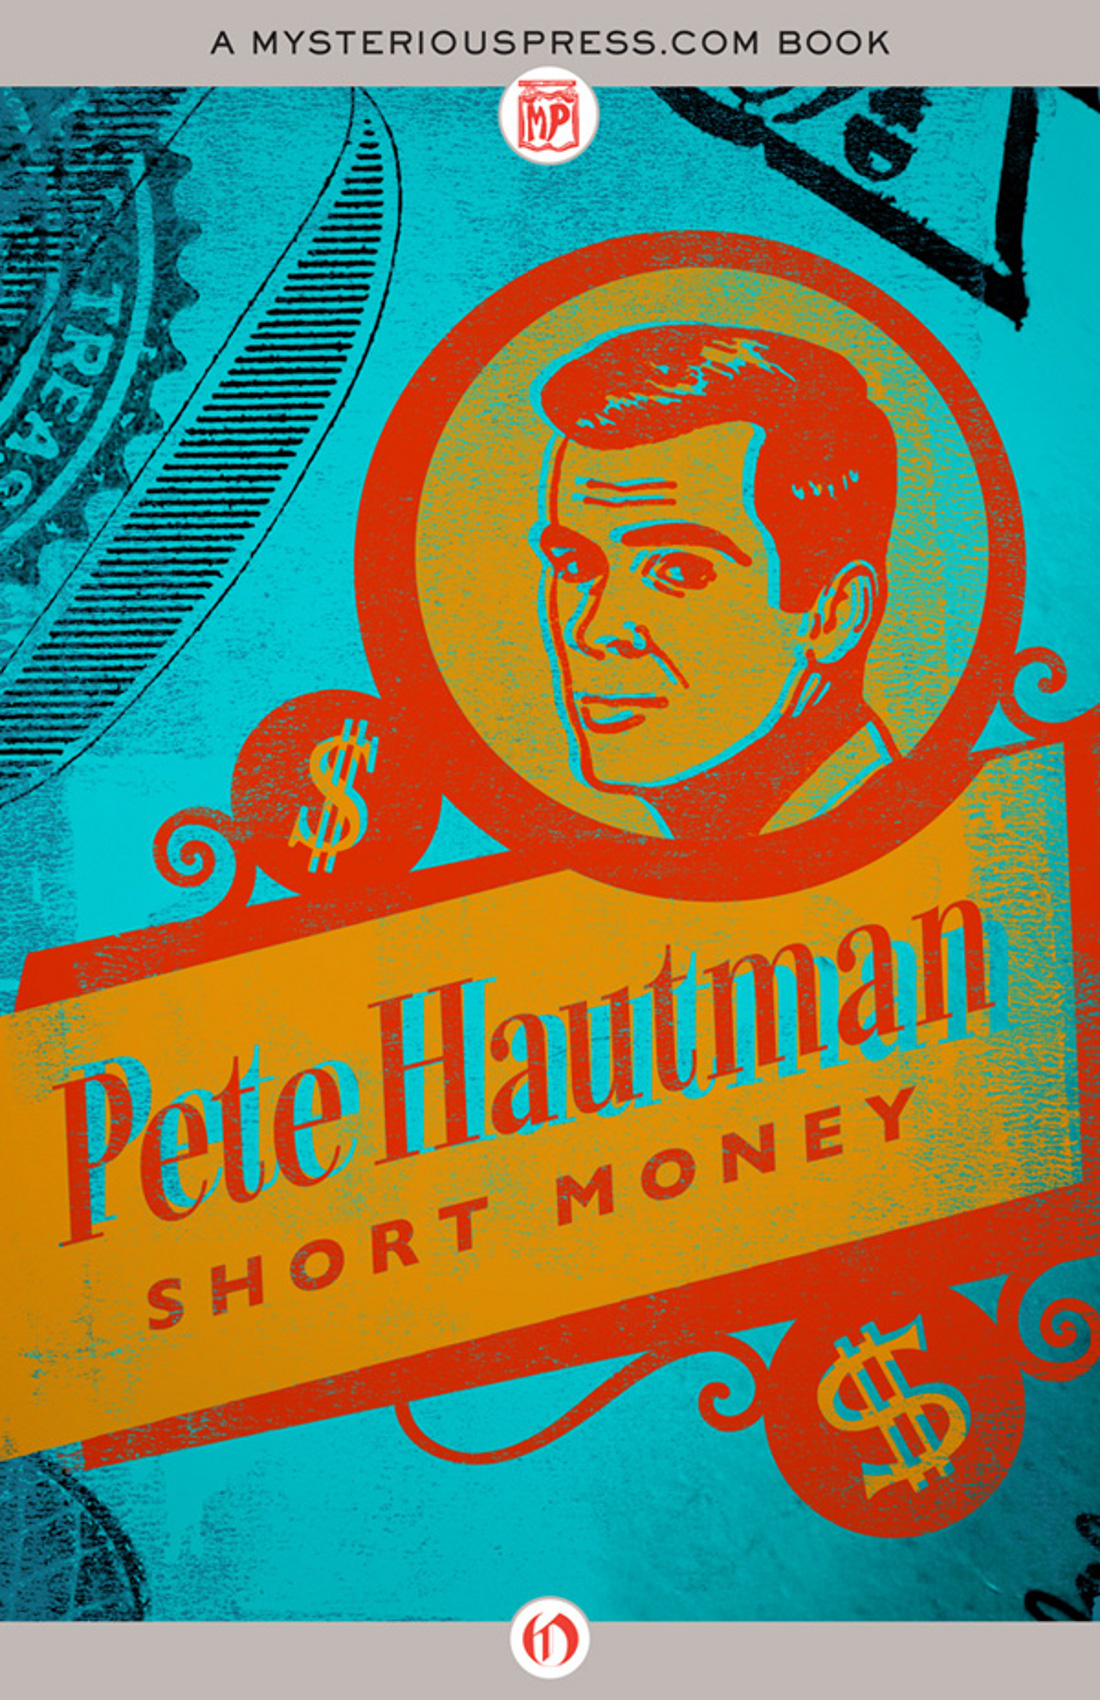 Short Money by Pete Hautman